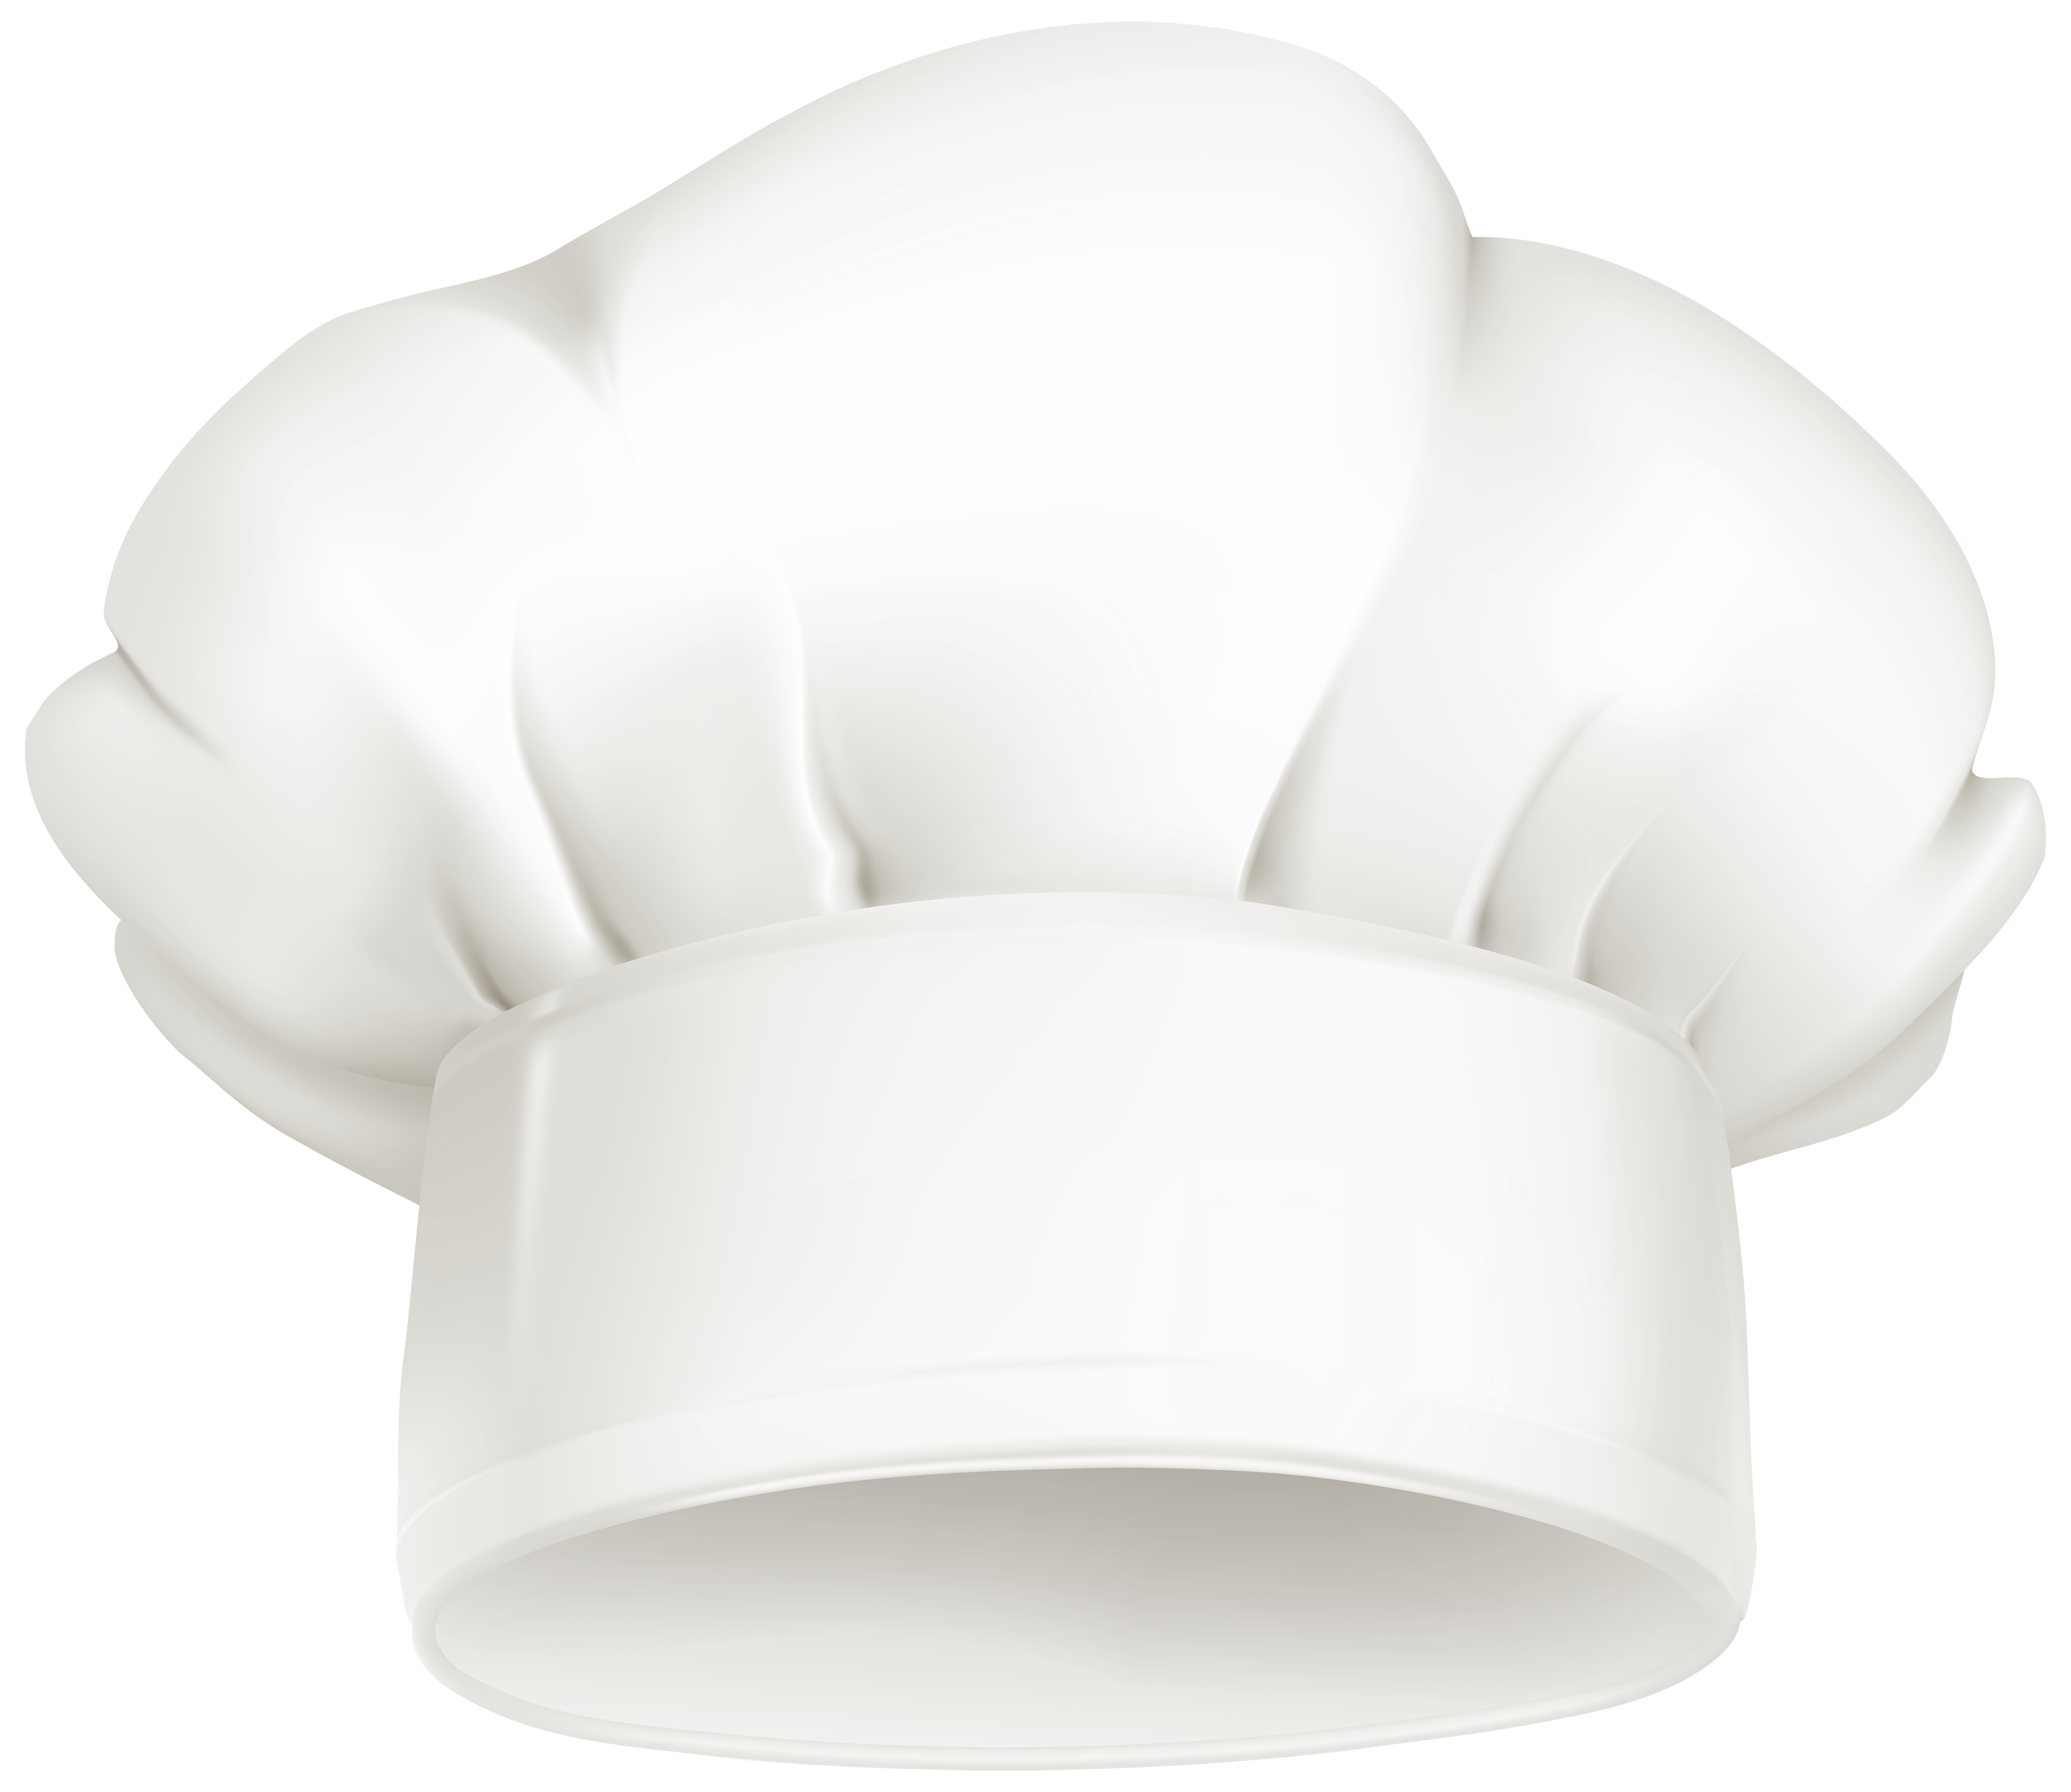 Chef chapeau PNG image image